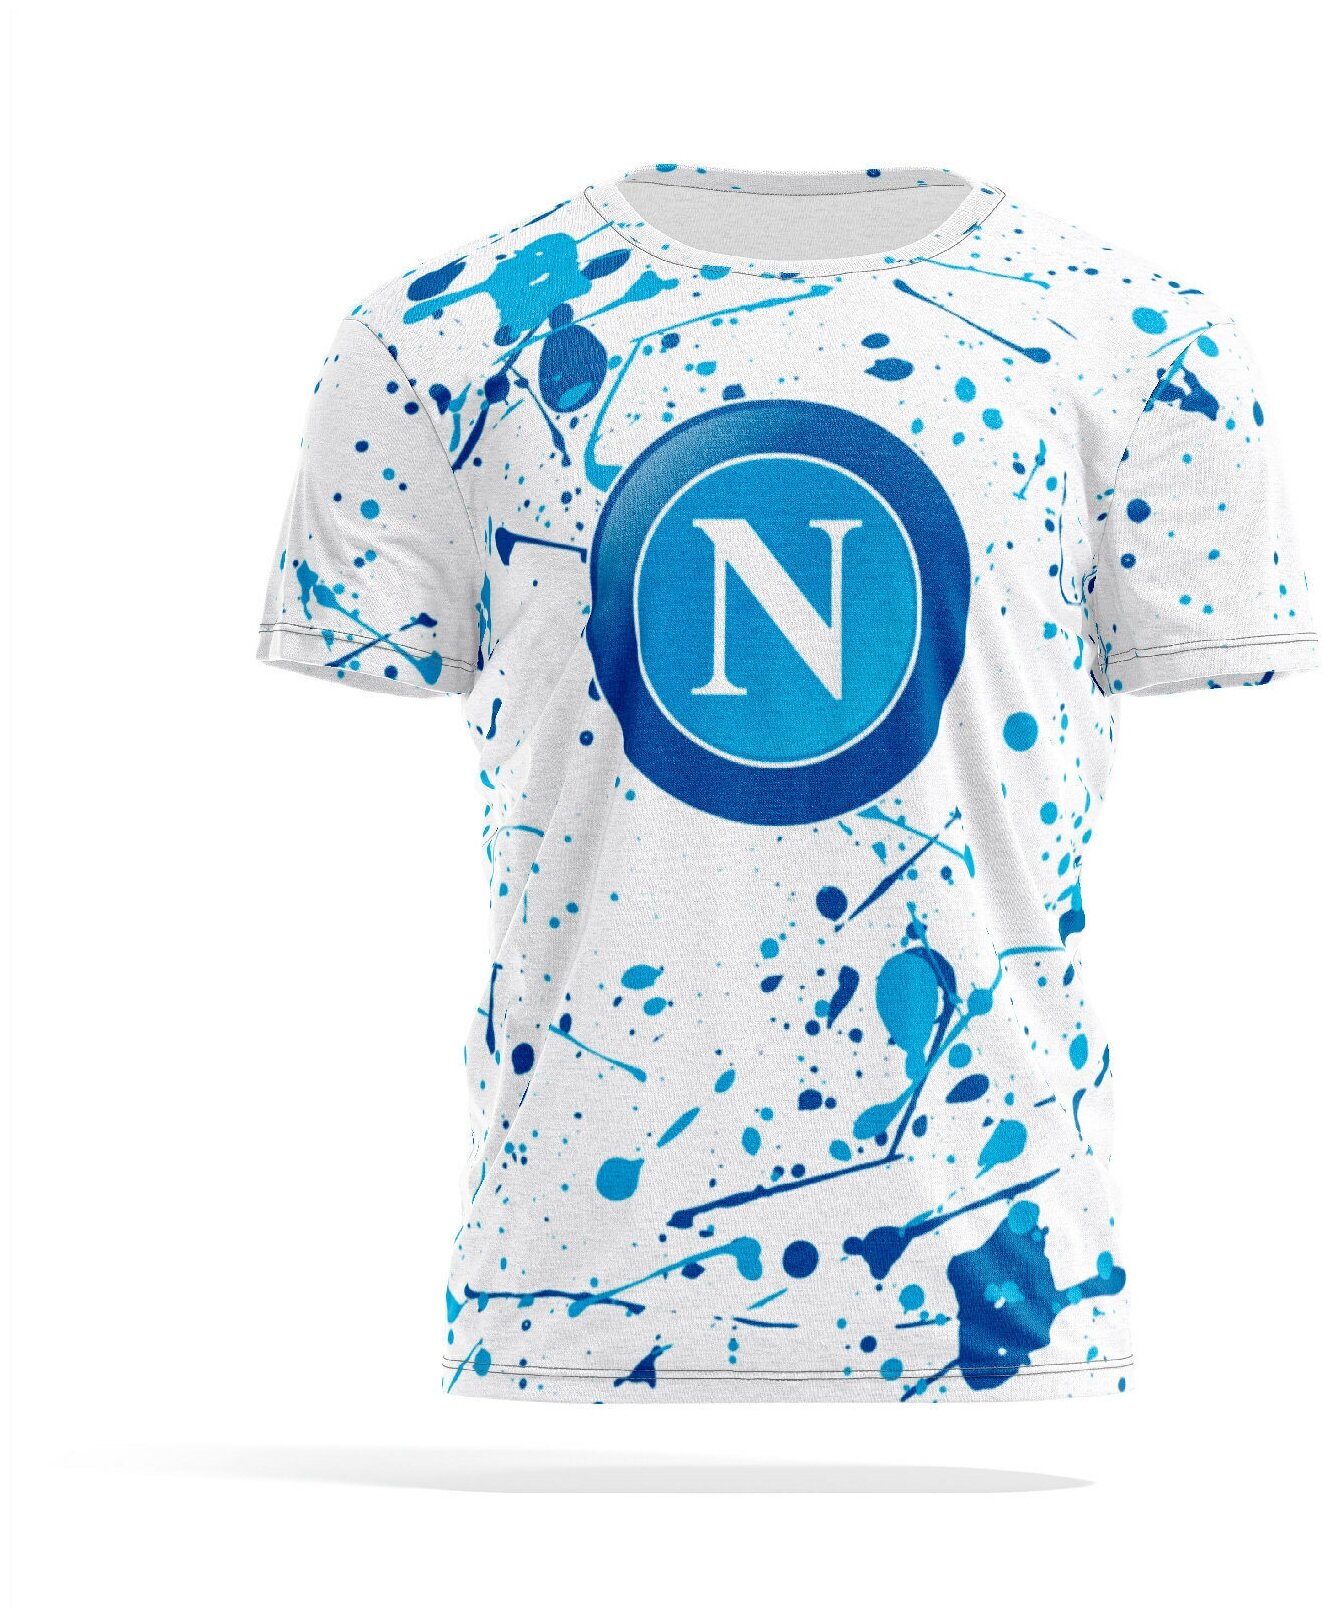 Футболка мужская 3D / Футбол / Napoli / наполи napoli спорт / MS3118321